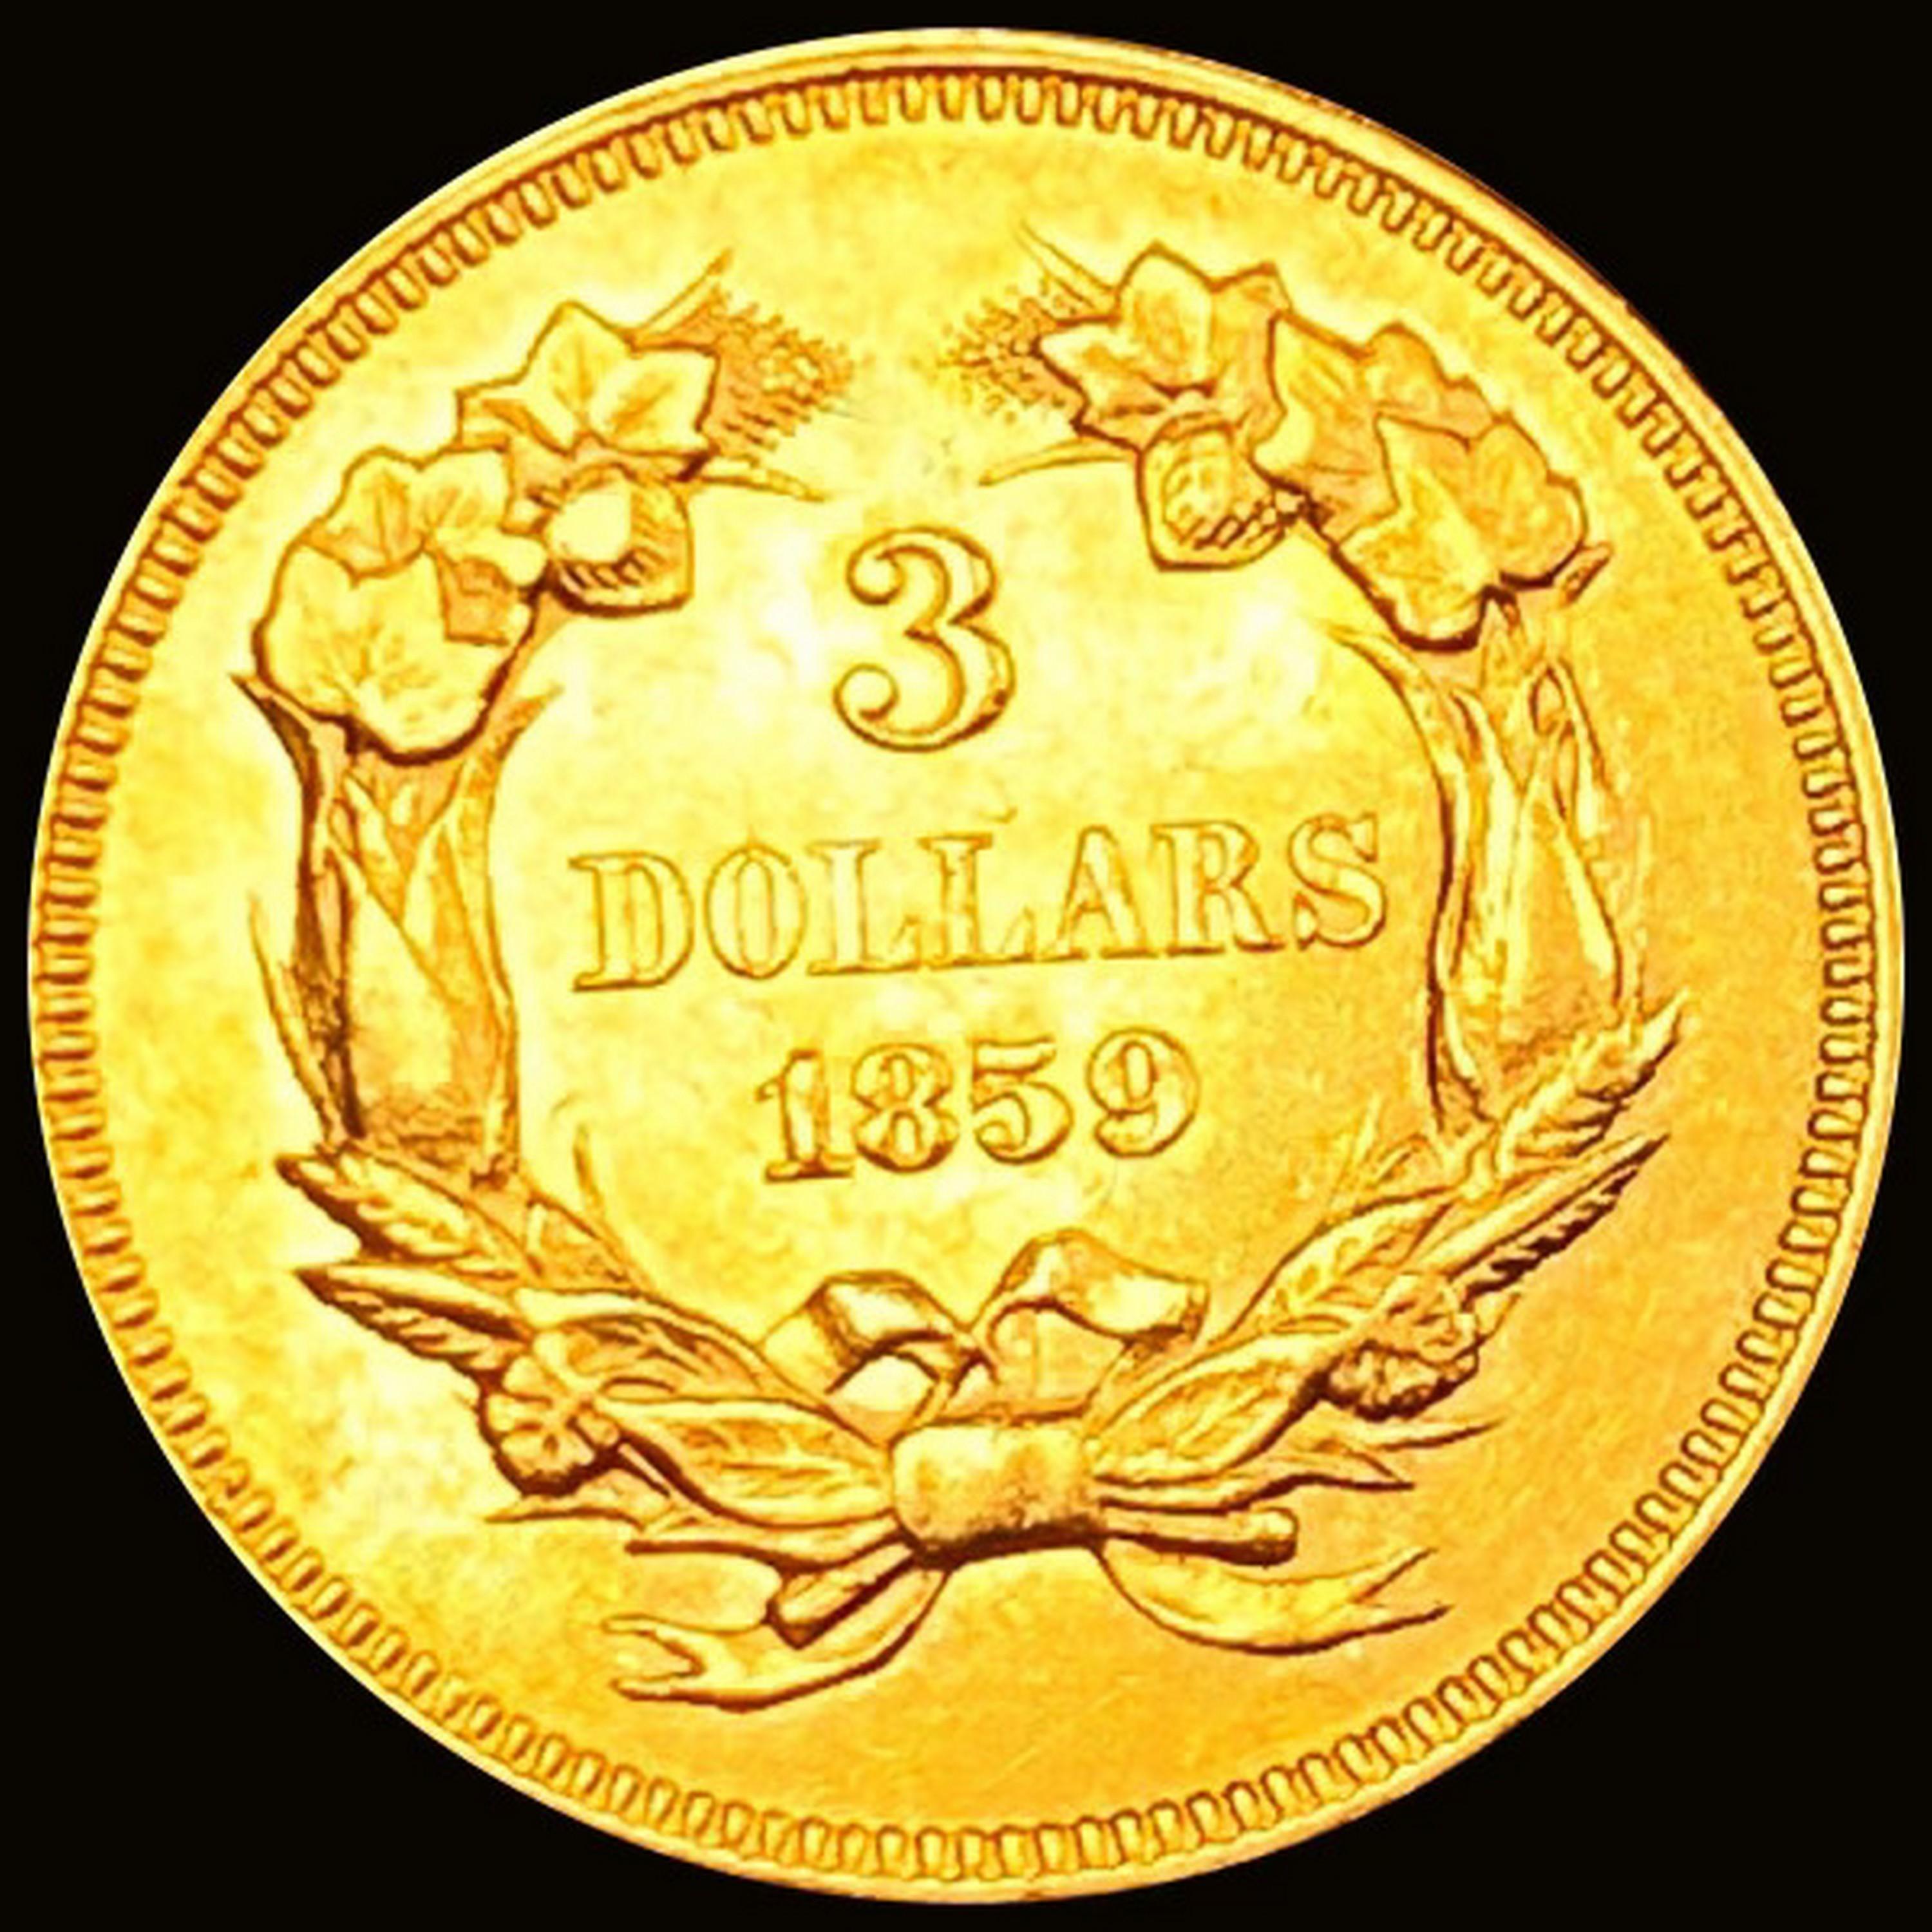 1859 $3 Gold Piece CHOICE BU